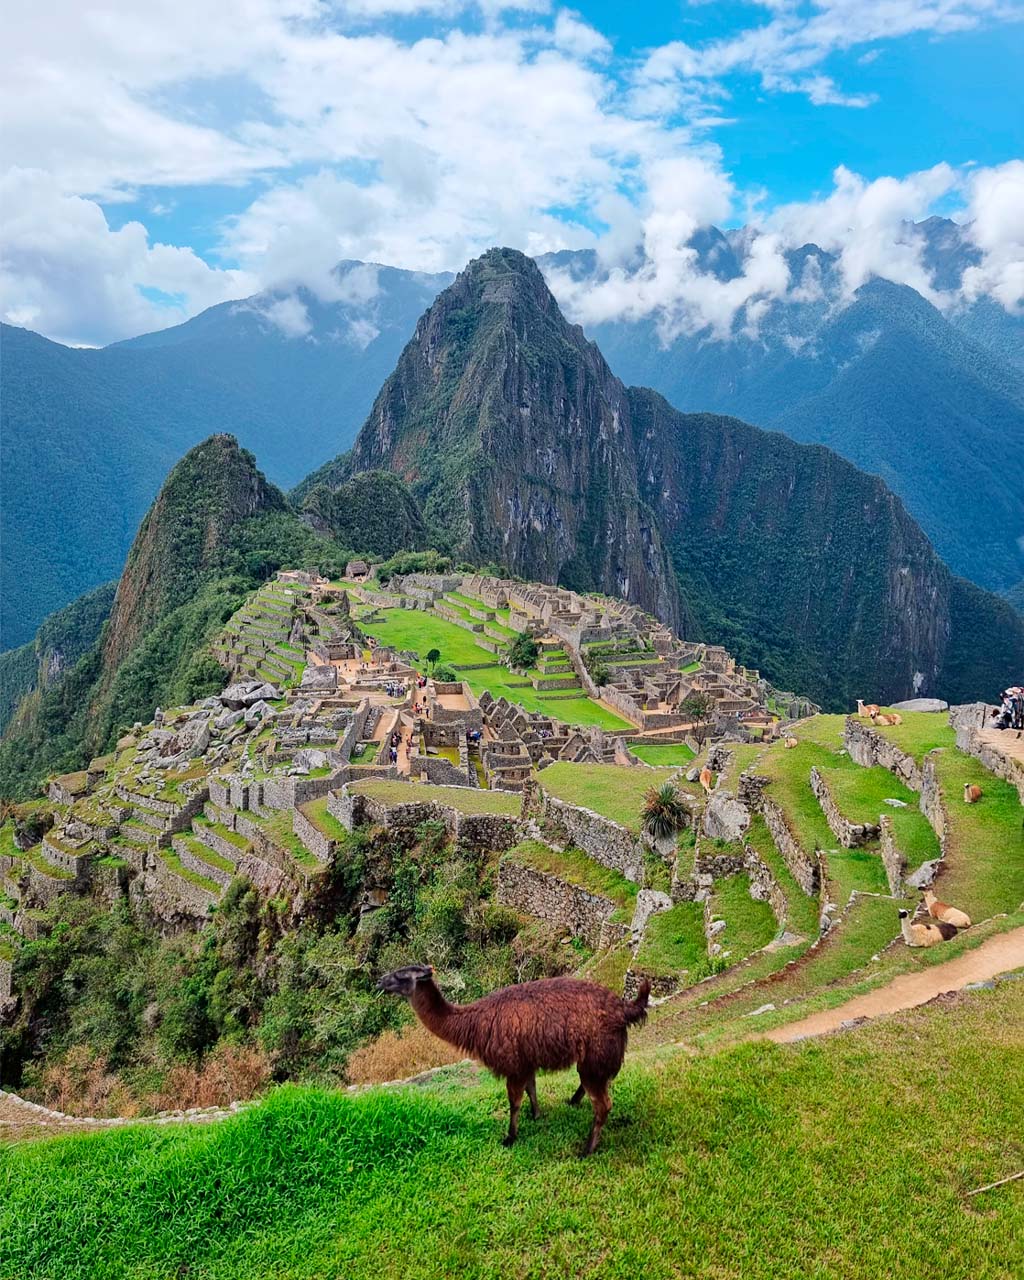 Machu Picchu, lost city of the Incas - Sam Corporation